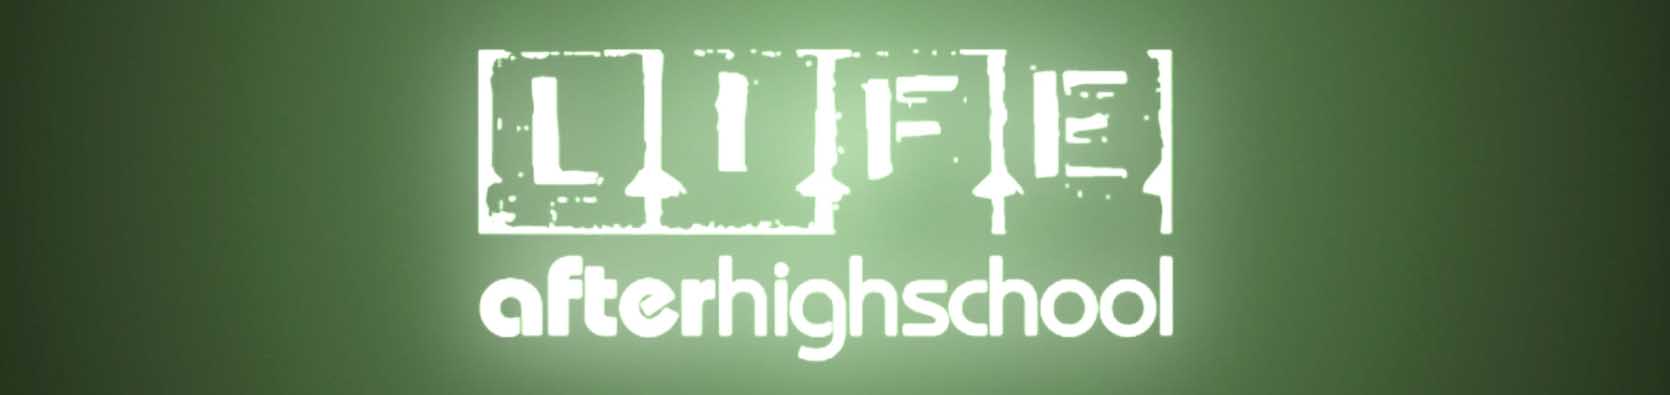 AfterHighschool (Page Headline)